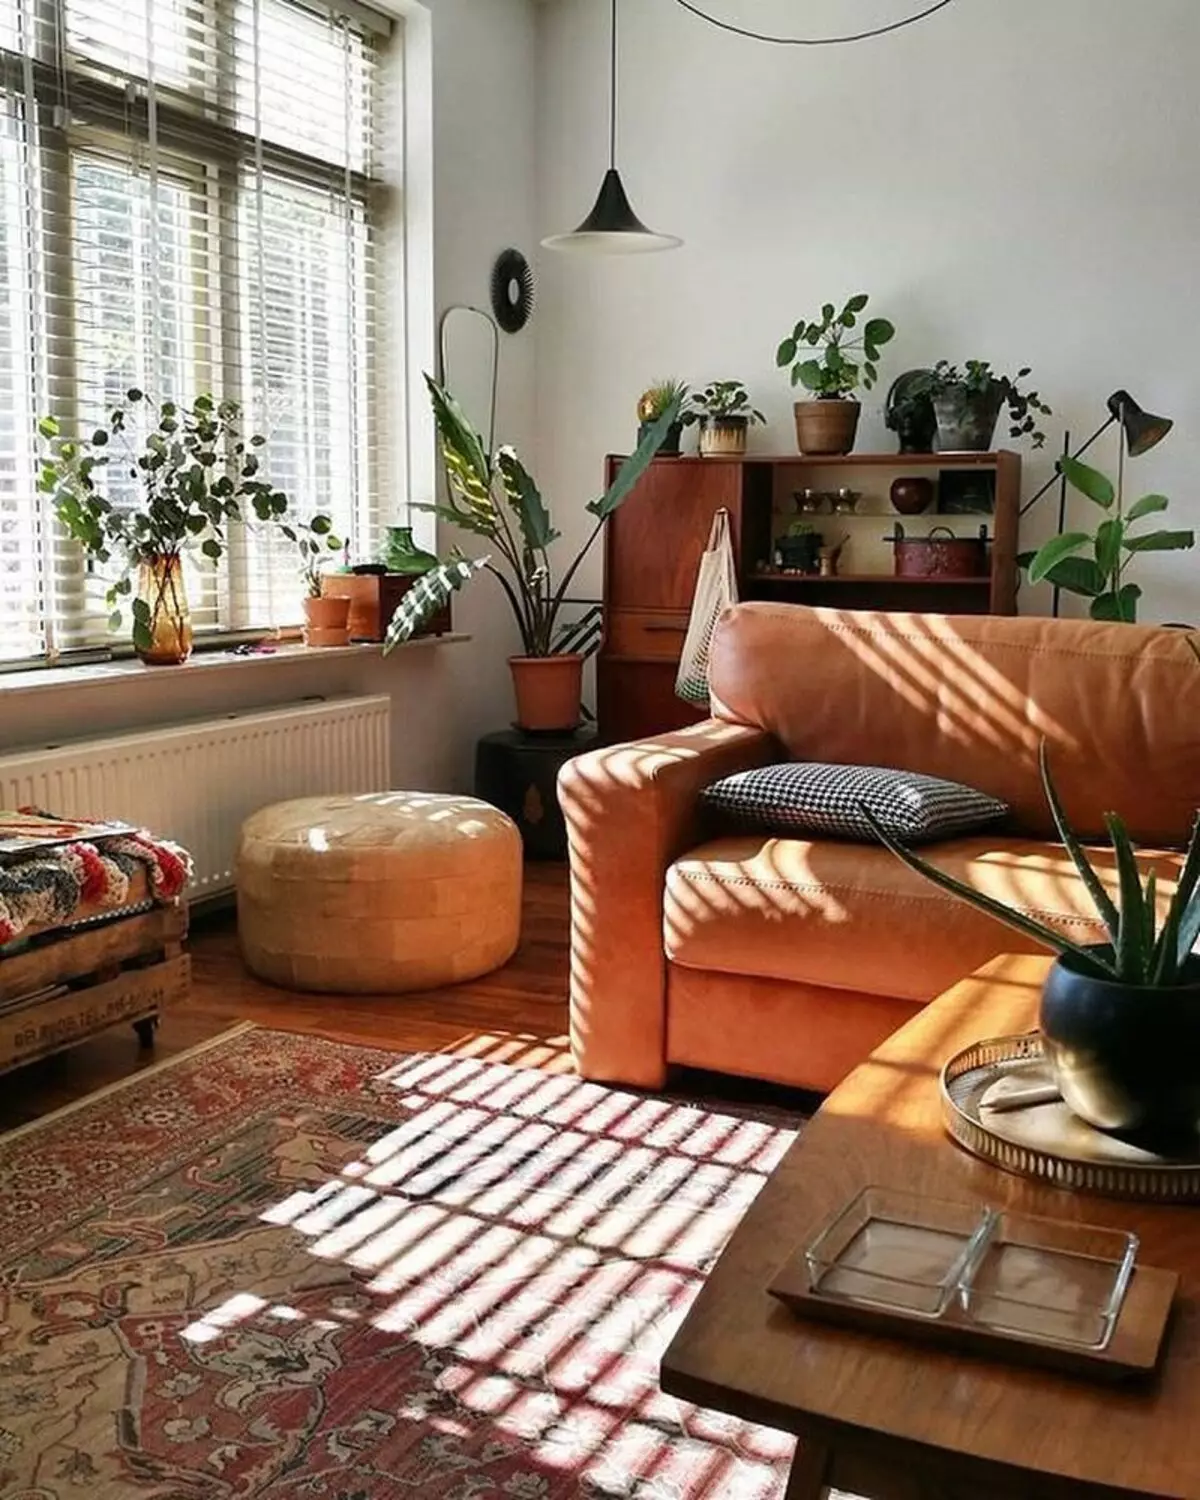 Perabot retro-sofa vintaj di ruang tamu yang selesa